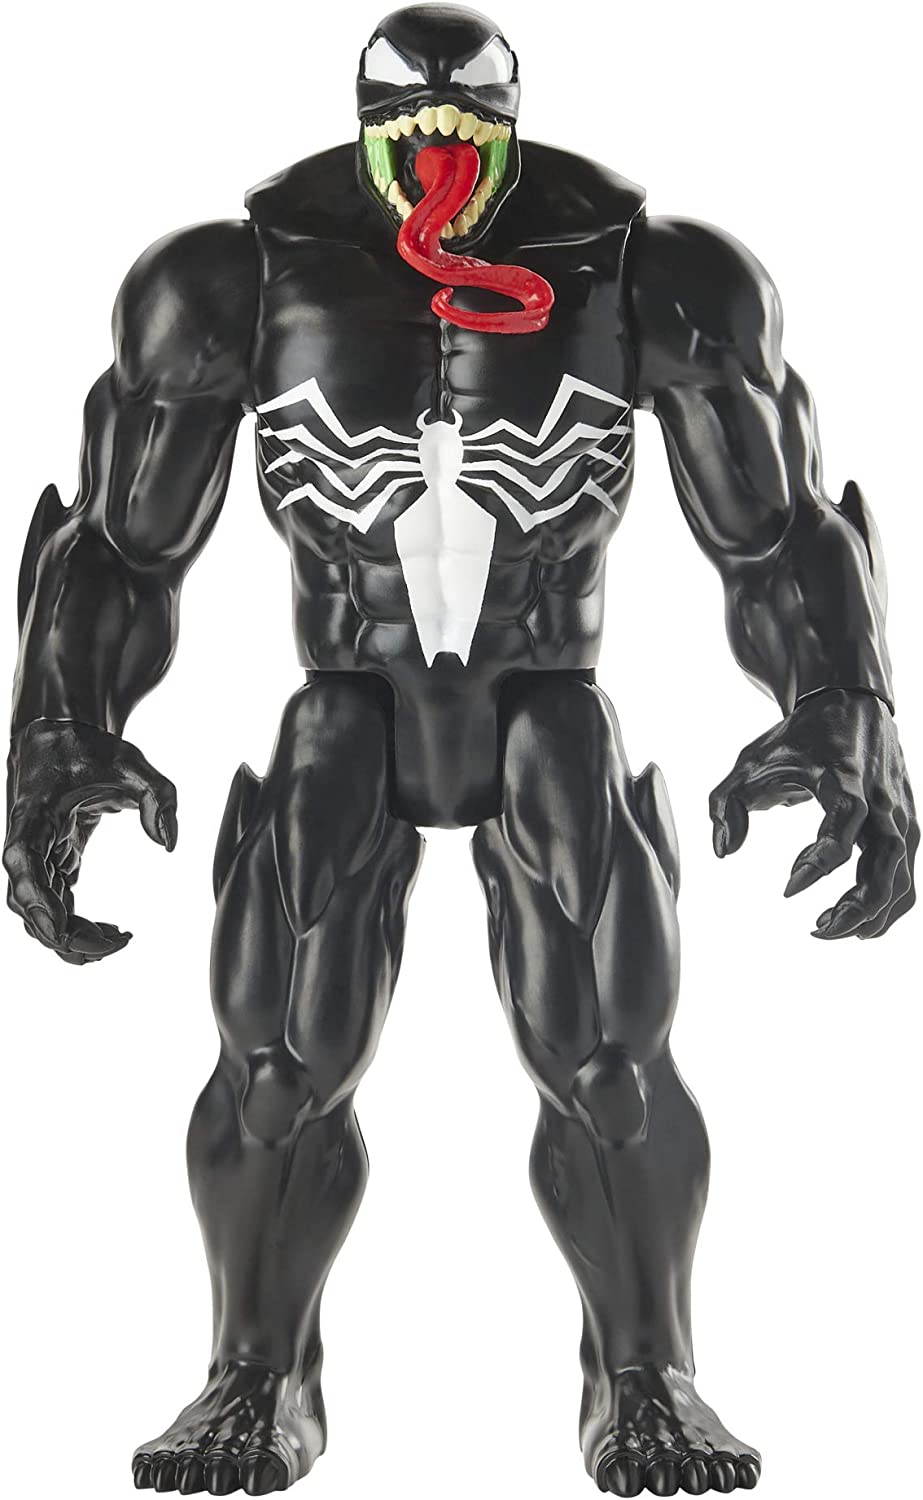 Spider-Man Maximum Venom Titan Hero Venom Action Figure - Marvel Universe, Blast Gear-Compatible Back Port, Ages 4 and Up, Black